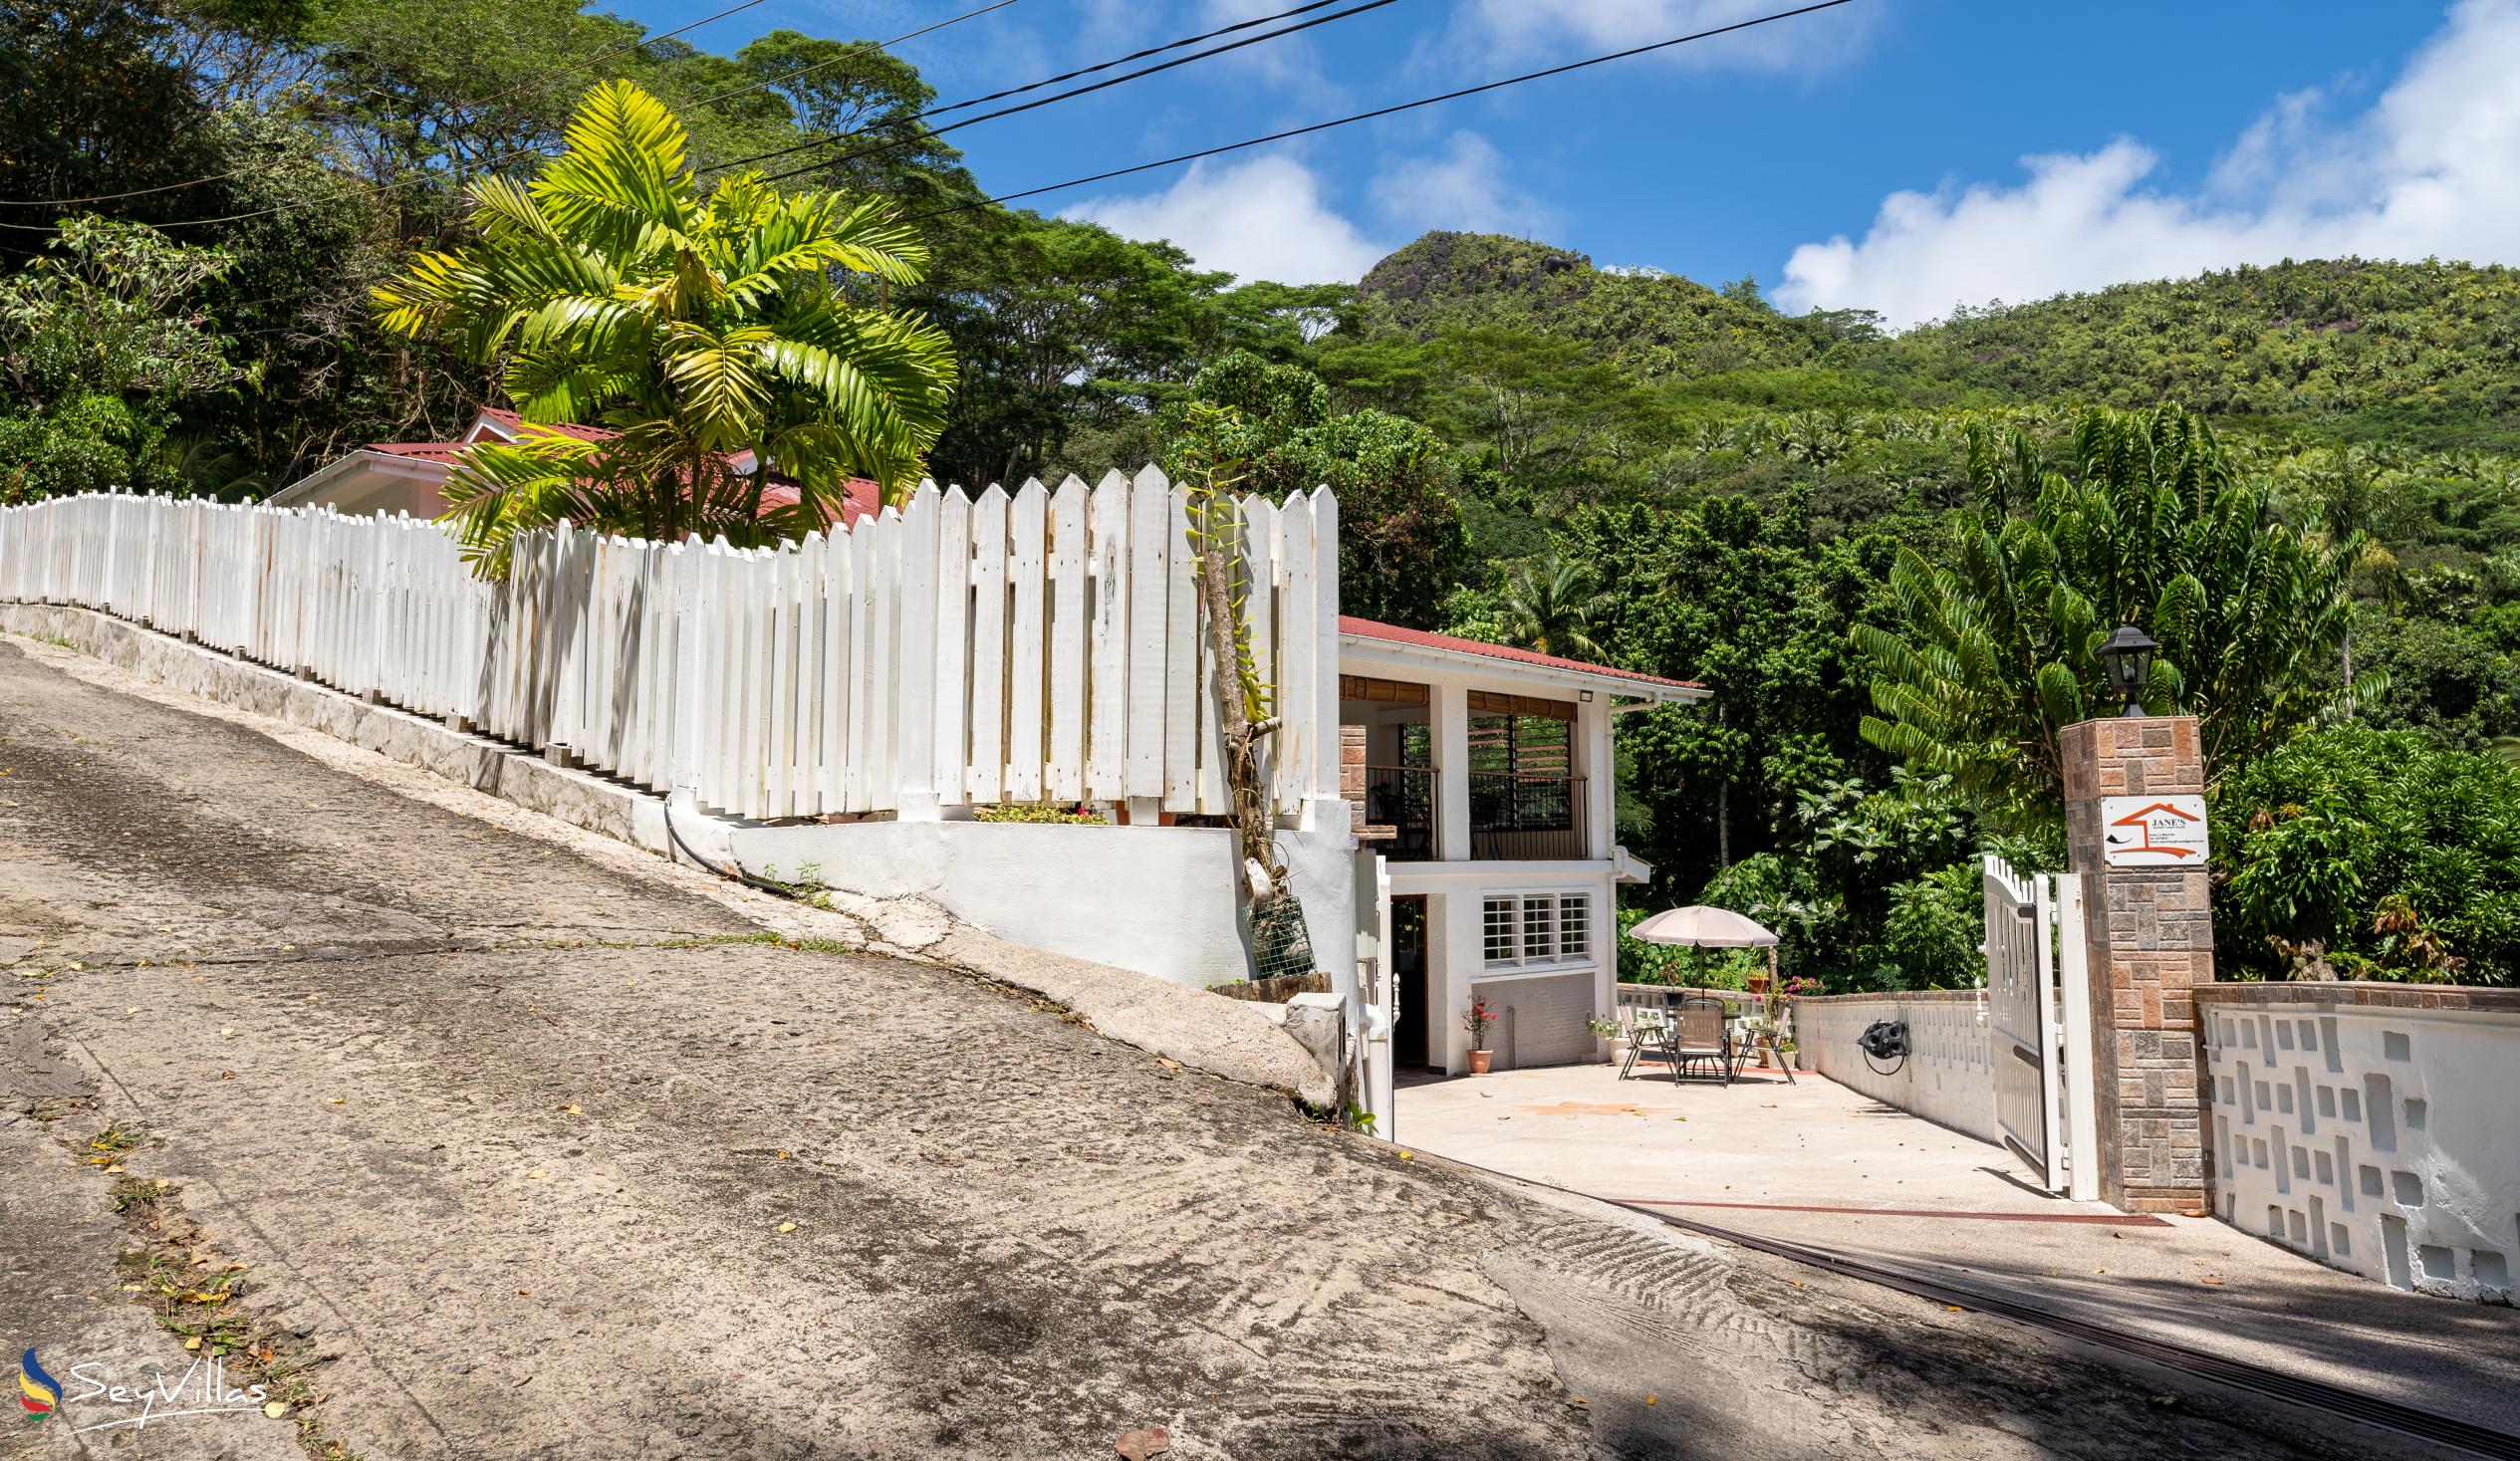 Foto 5: Jane's Serenity Guesthouse - Aussenbereich - Mahé (Seychellen)